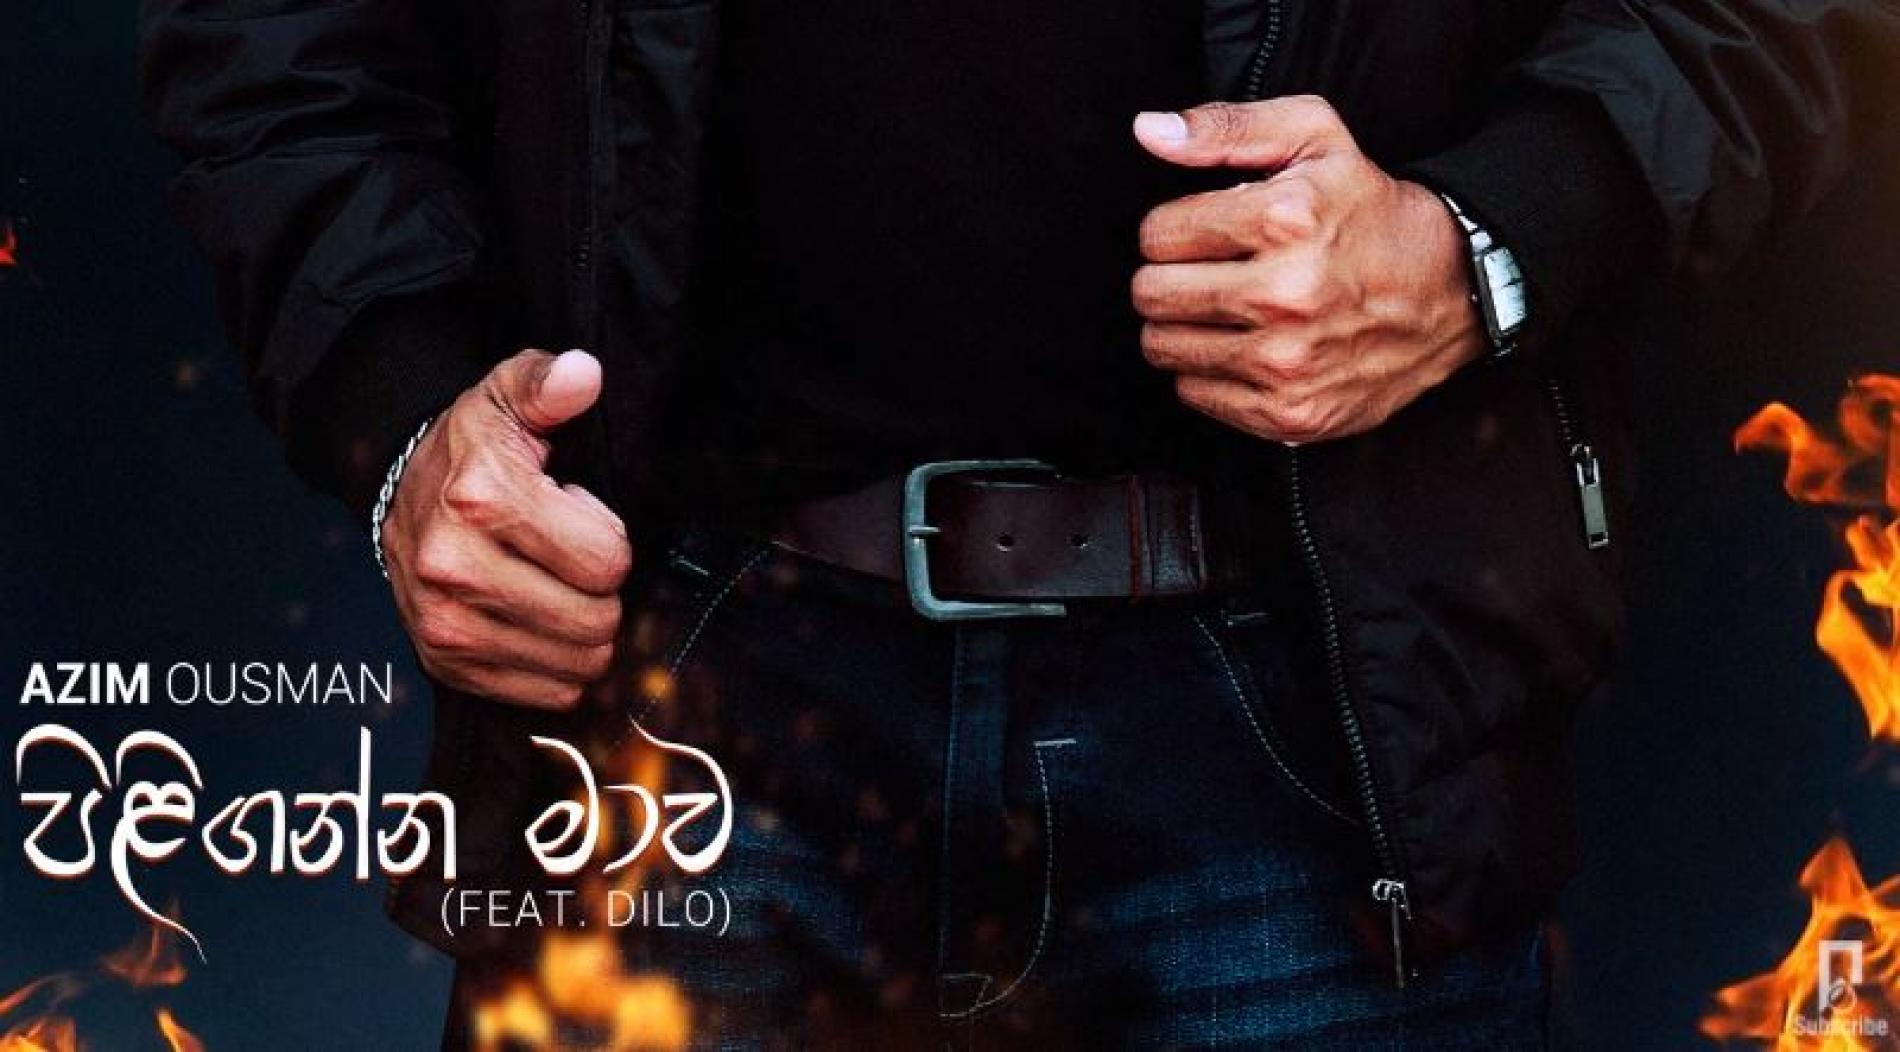 New Music : Azim Ousman – Piliganna Maawa | පිළිගන්න මාව (Feat Dilo) (From “Burning Drops” Album